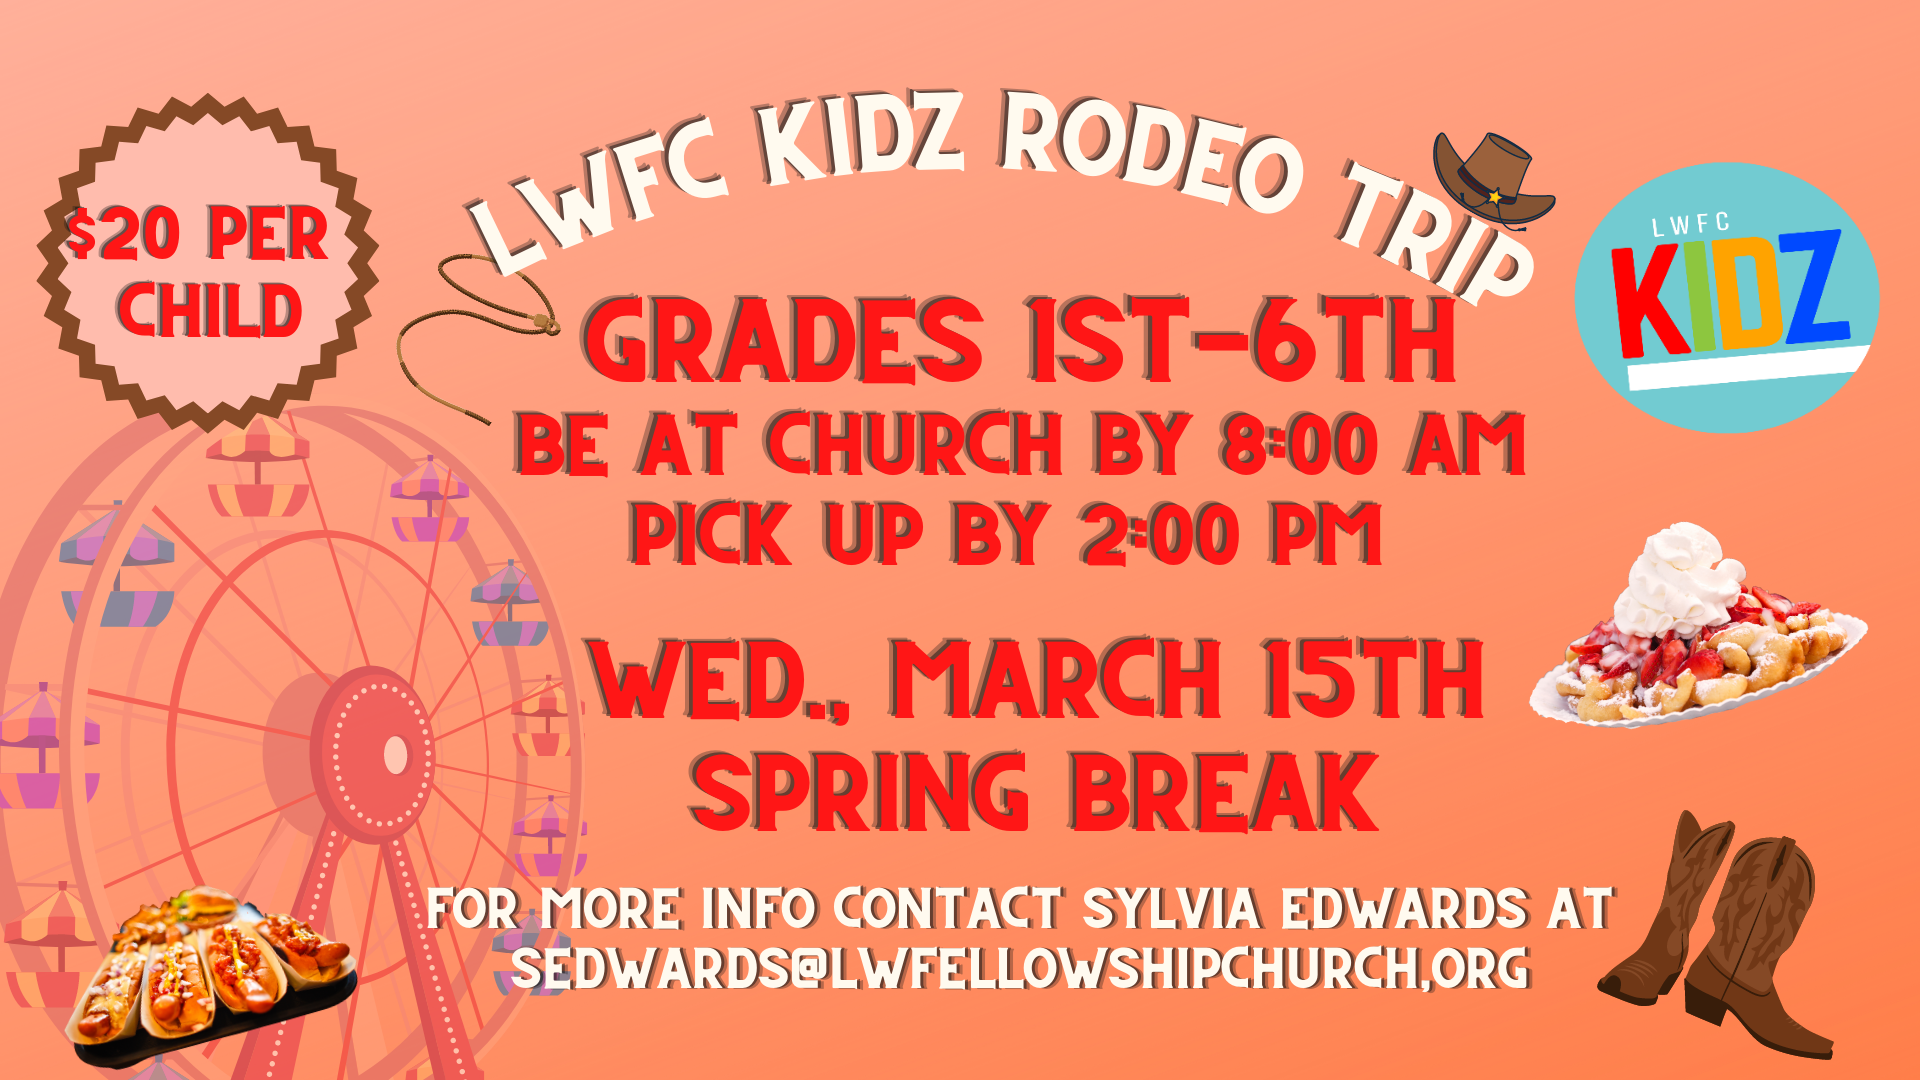 LWFC KIDZ RODEO TRIP March 15th head image